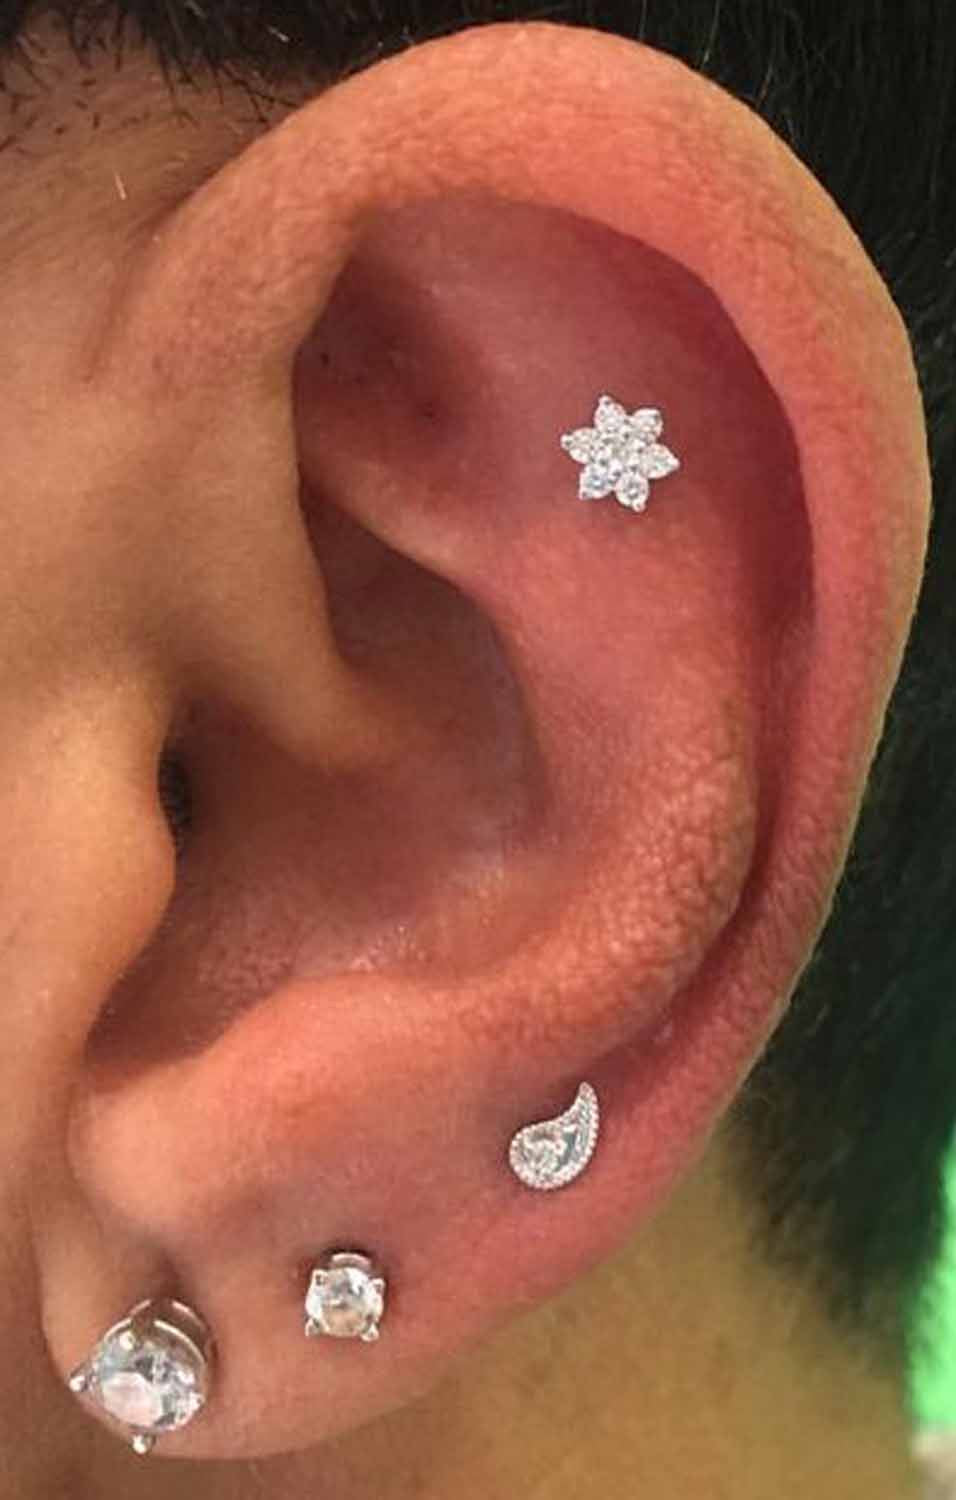 Cute Ear Piercing Ideas for Women at MyBodiArt.com - Crystal CA Flower Constellation Pinna Cartilage Helix Earring Stud 